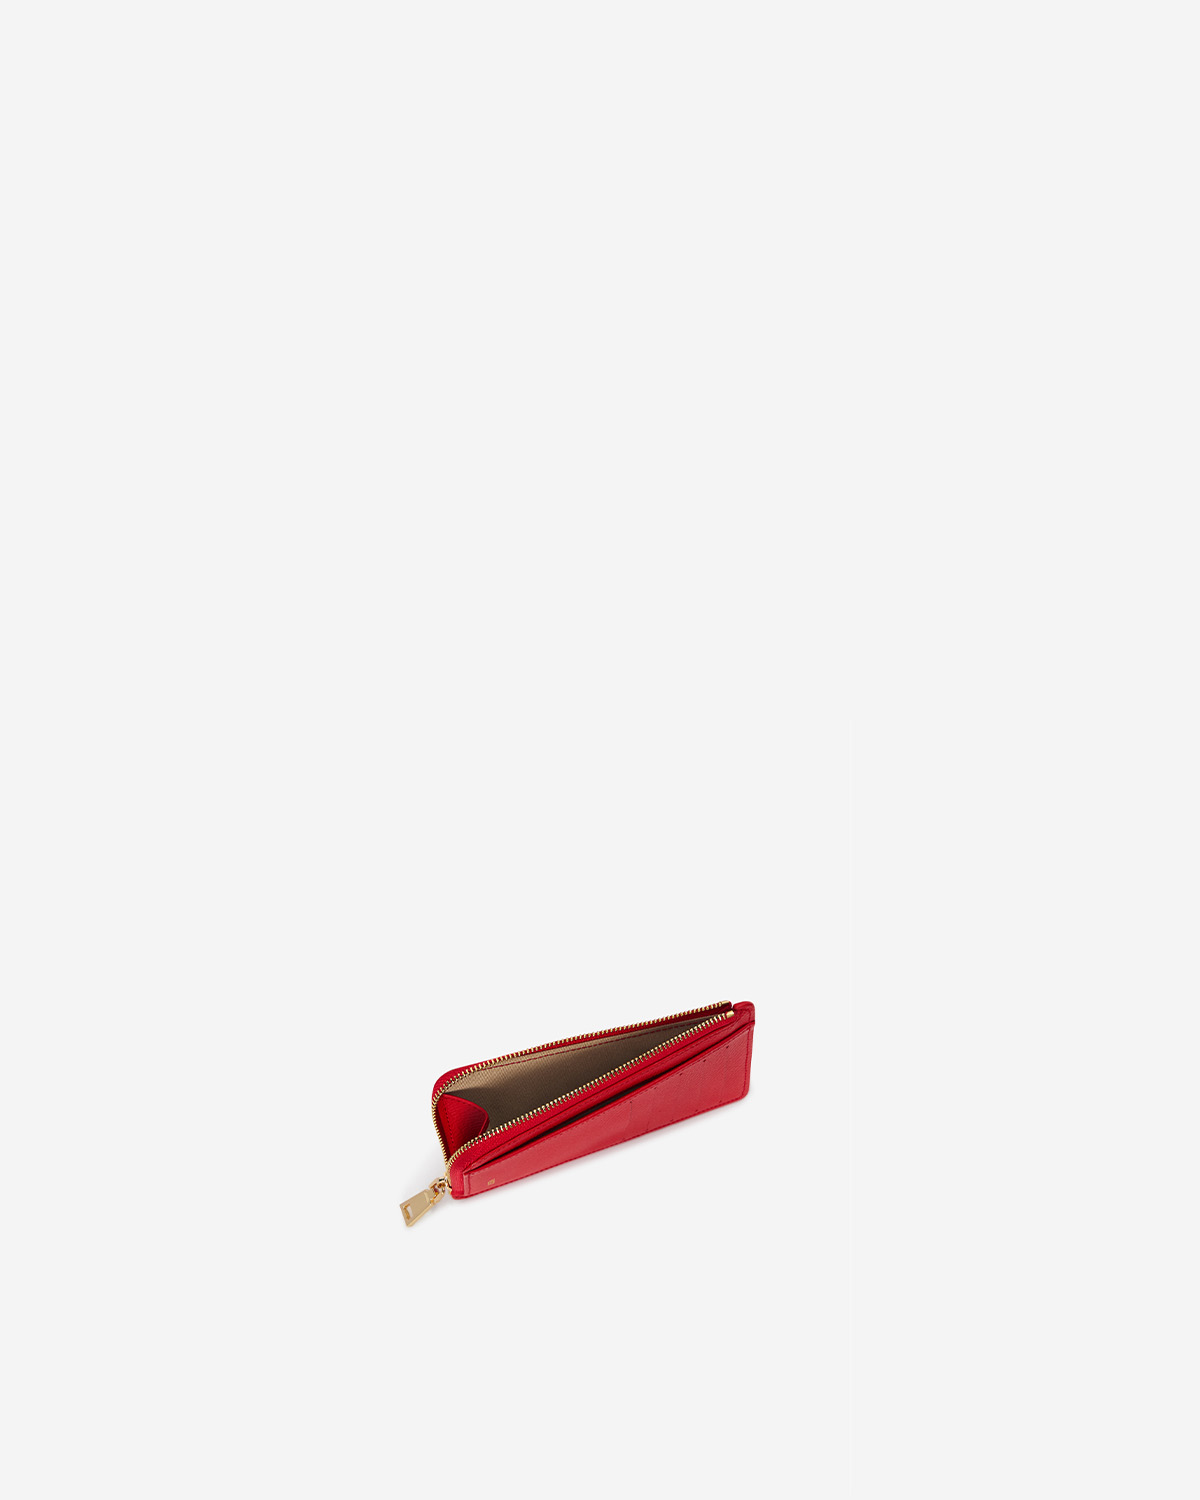 VERA Emily Long Card holder in Passionate Red กระเป๋าใส่บัตรหนังแท้ ทรงยาว พร้อมช่องซิบ สีแดง